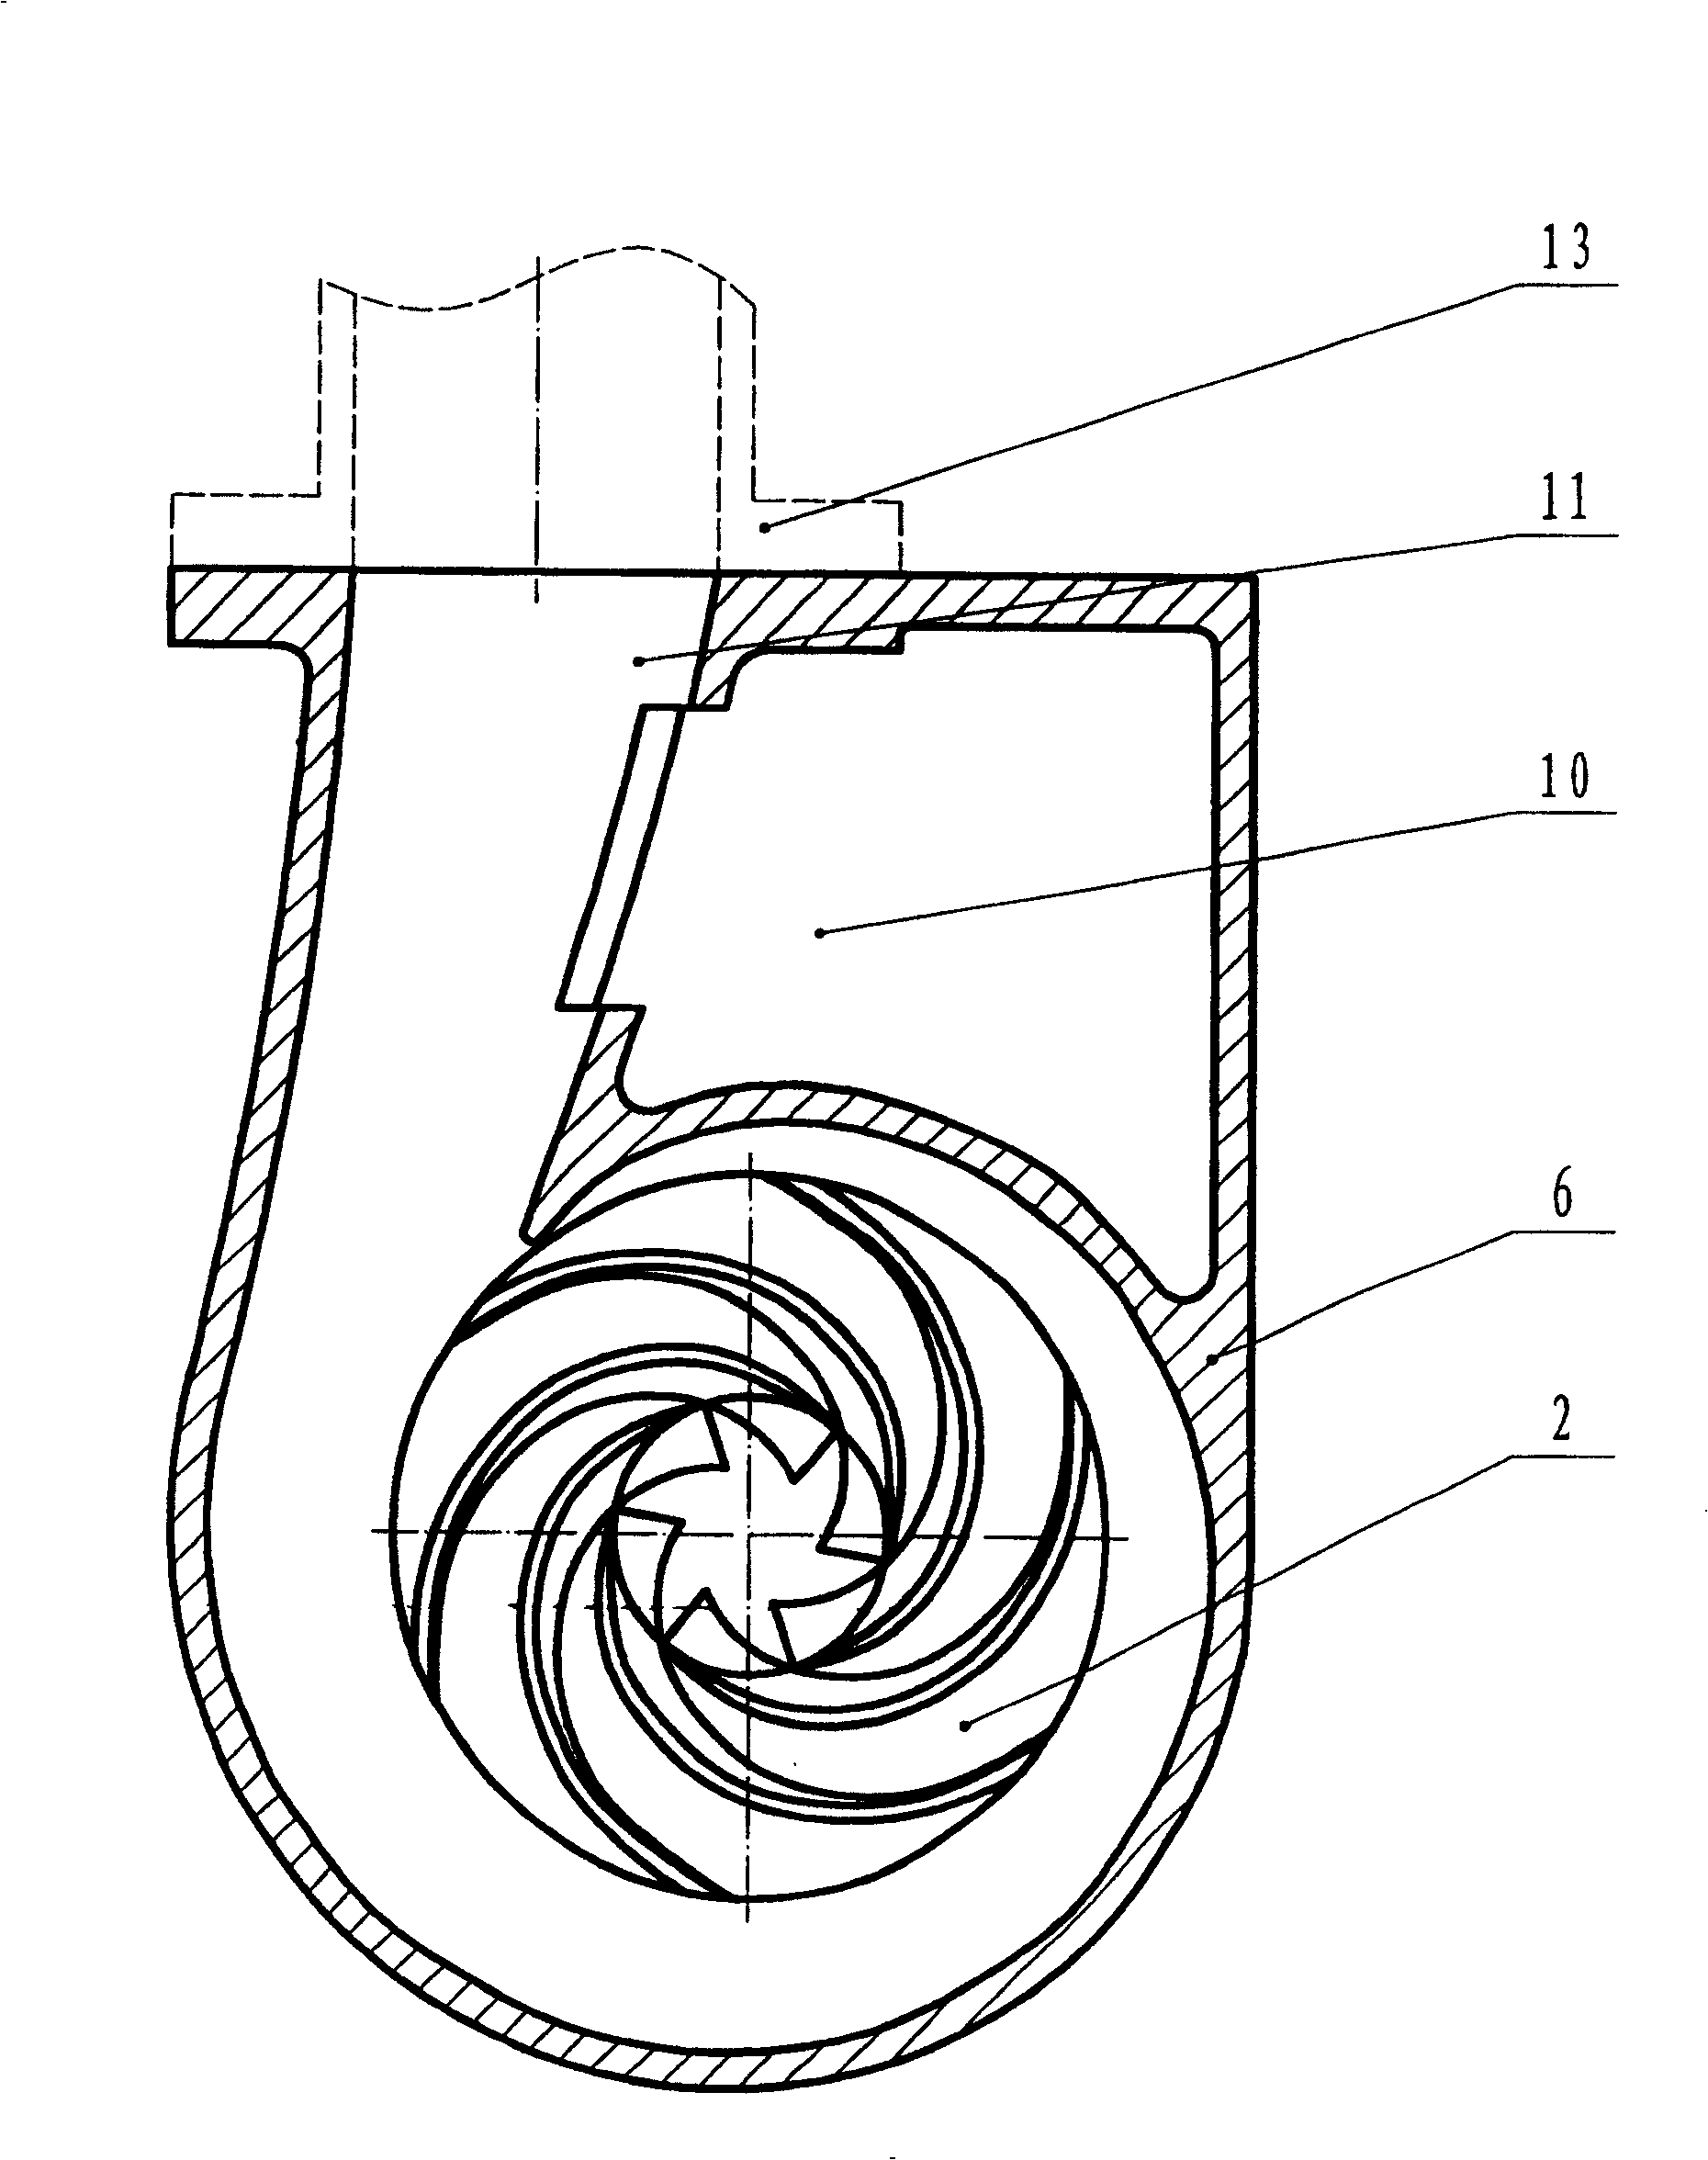 Big-flow self-priming centrifugal pump